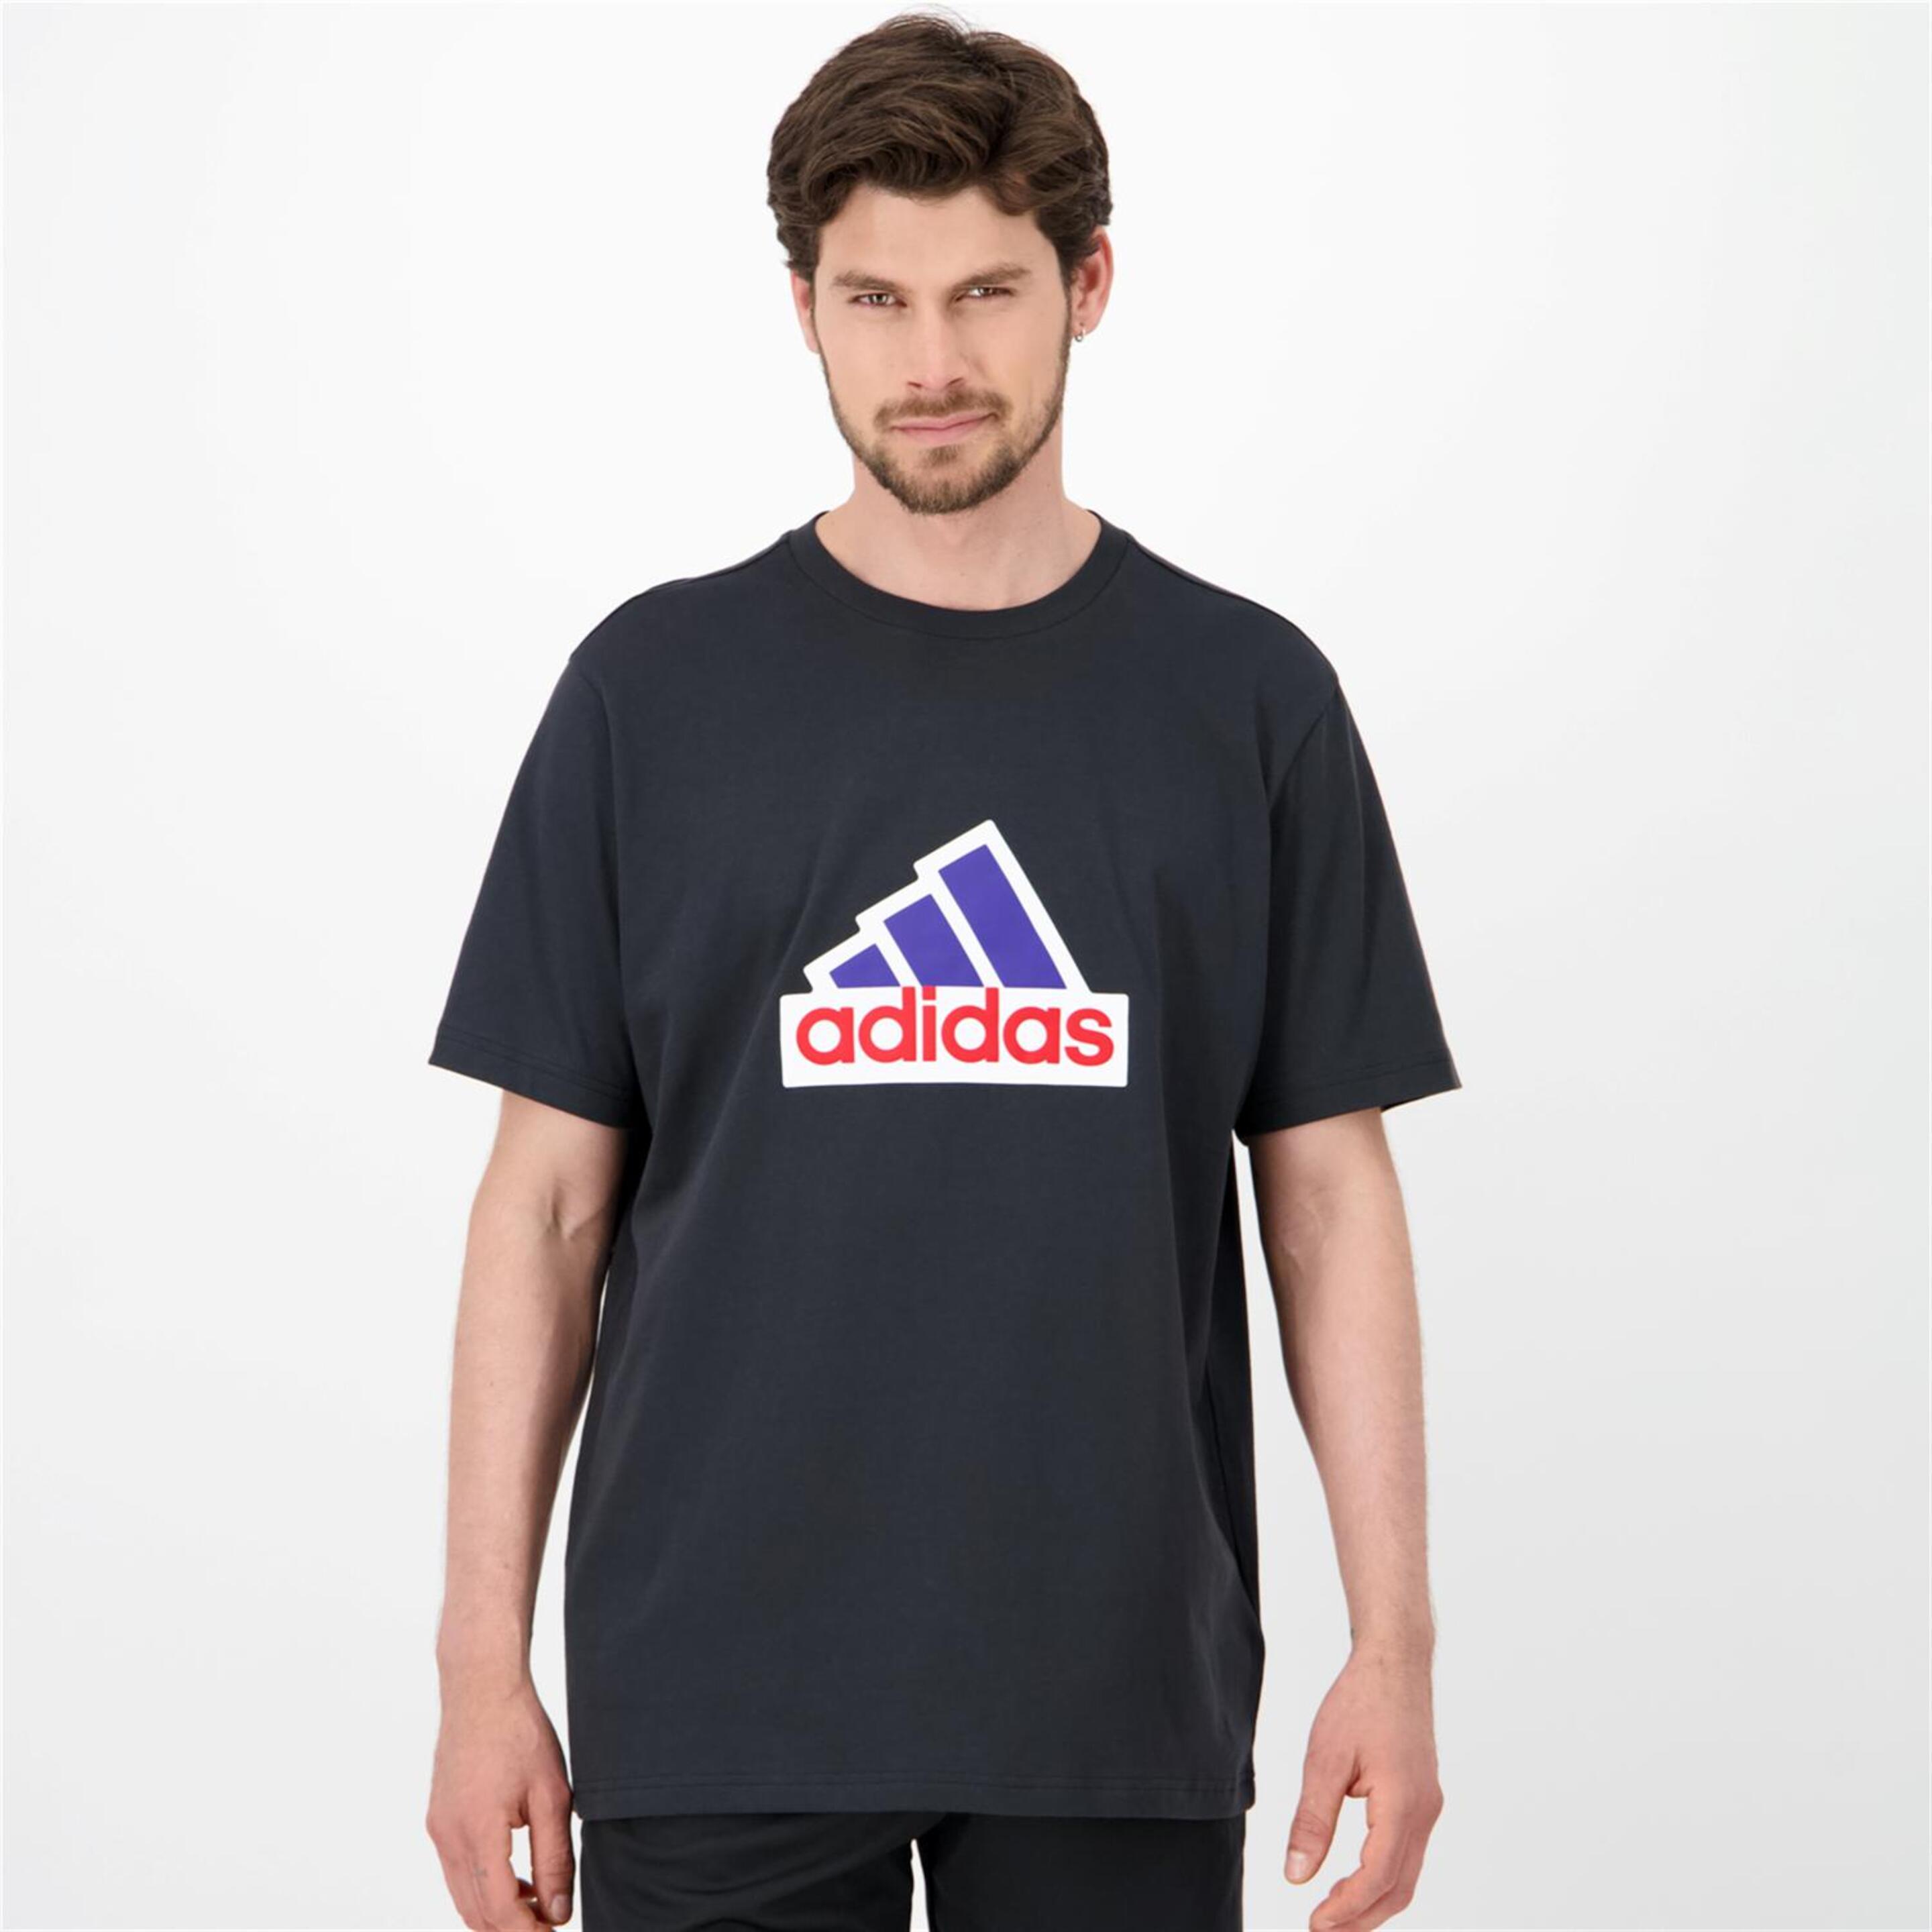 adidas Oly - negro - T-shirt Homem